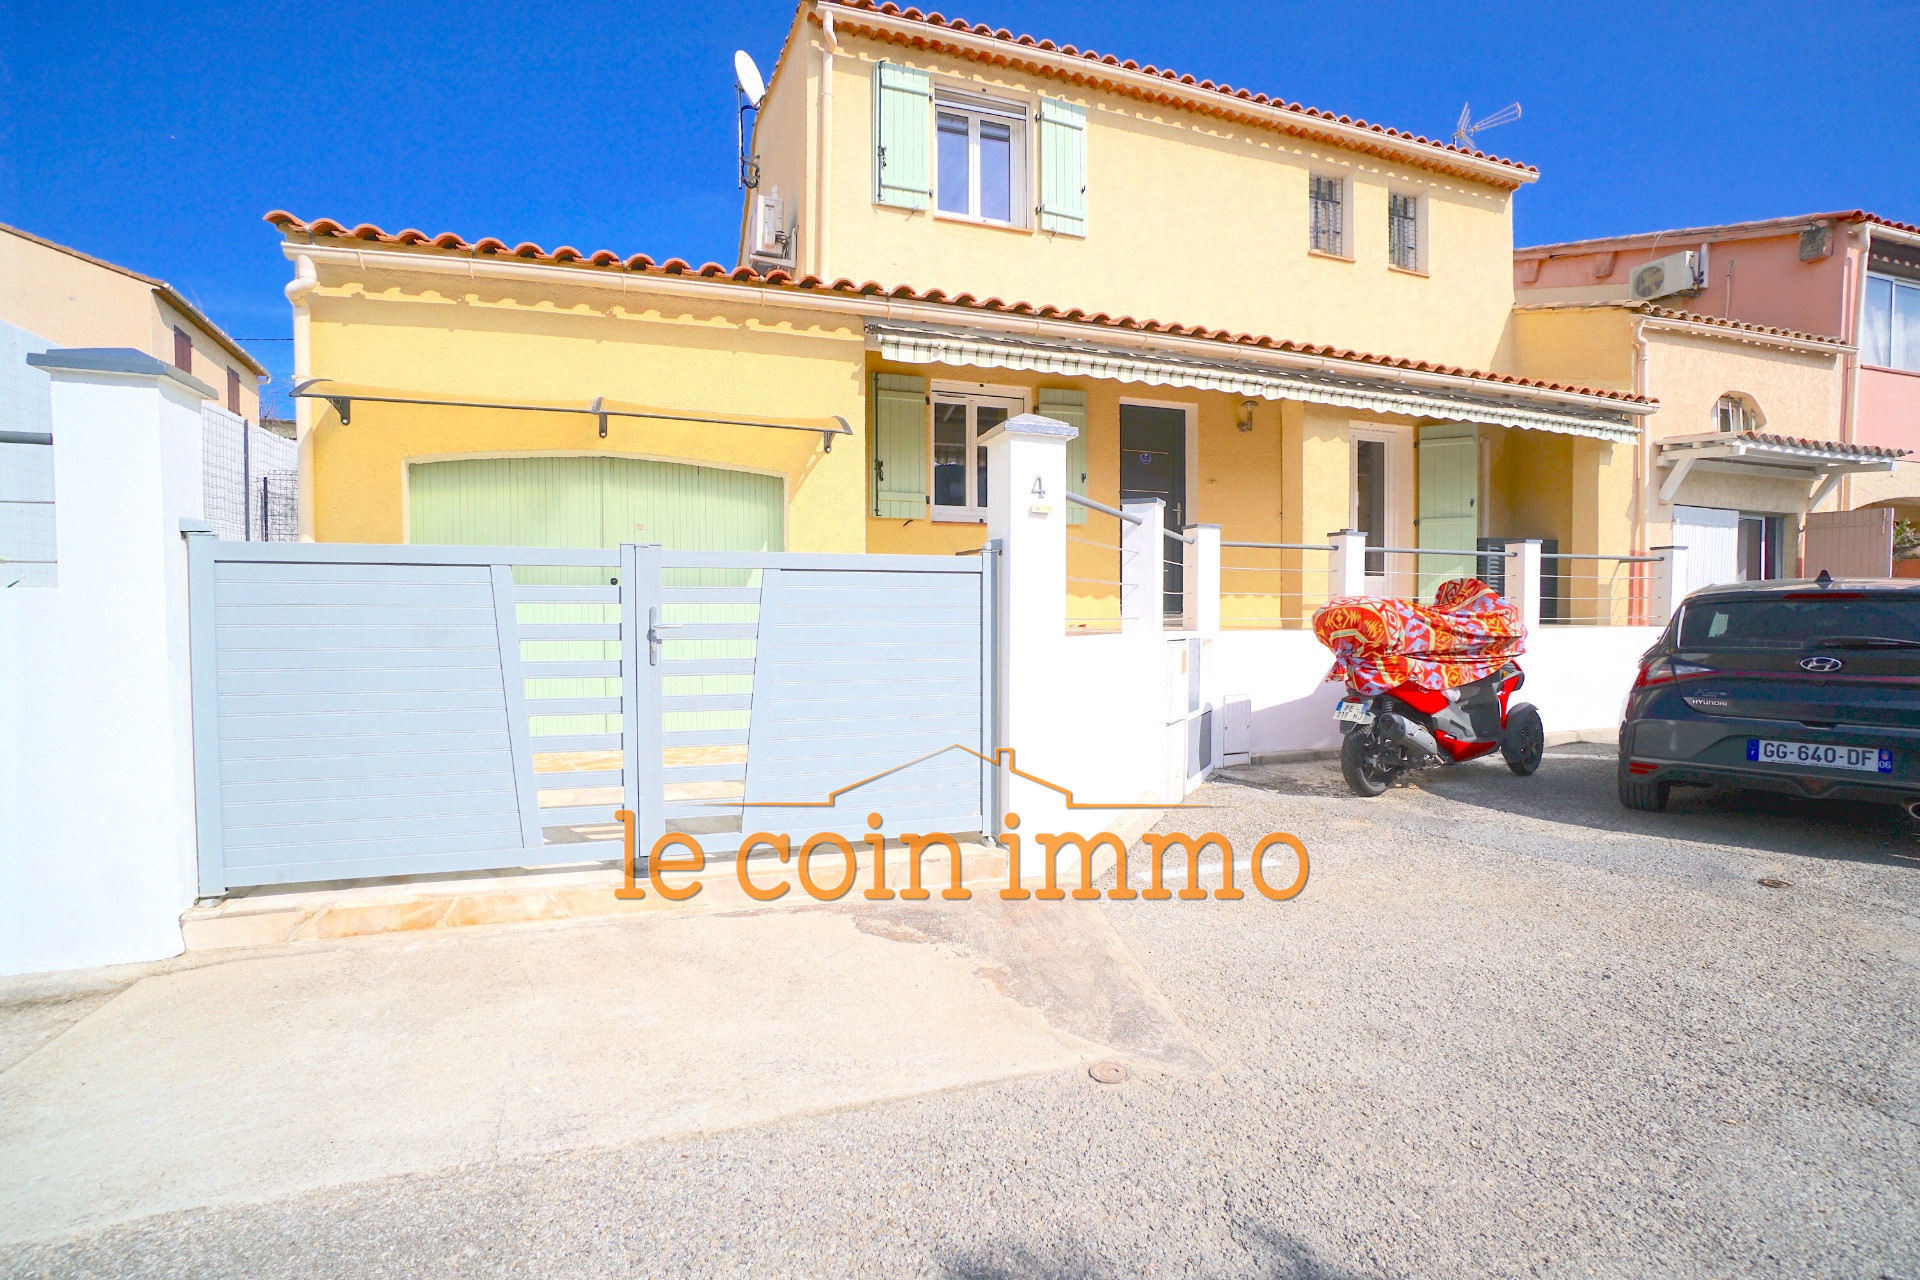 Vente Maison 127m² à Antibes (06160) - Le Coin Immo